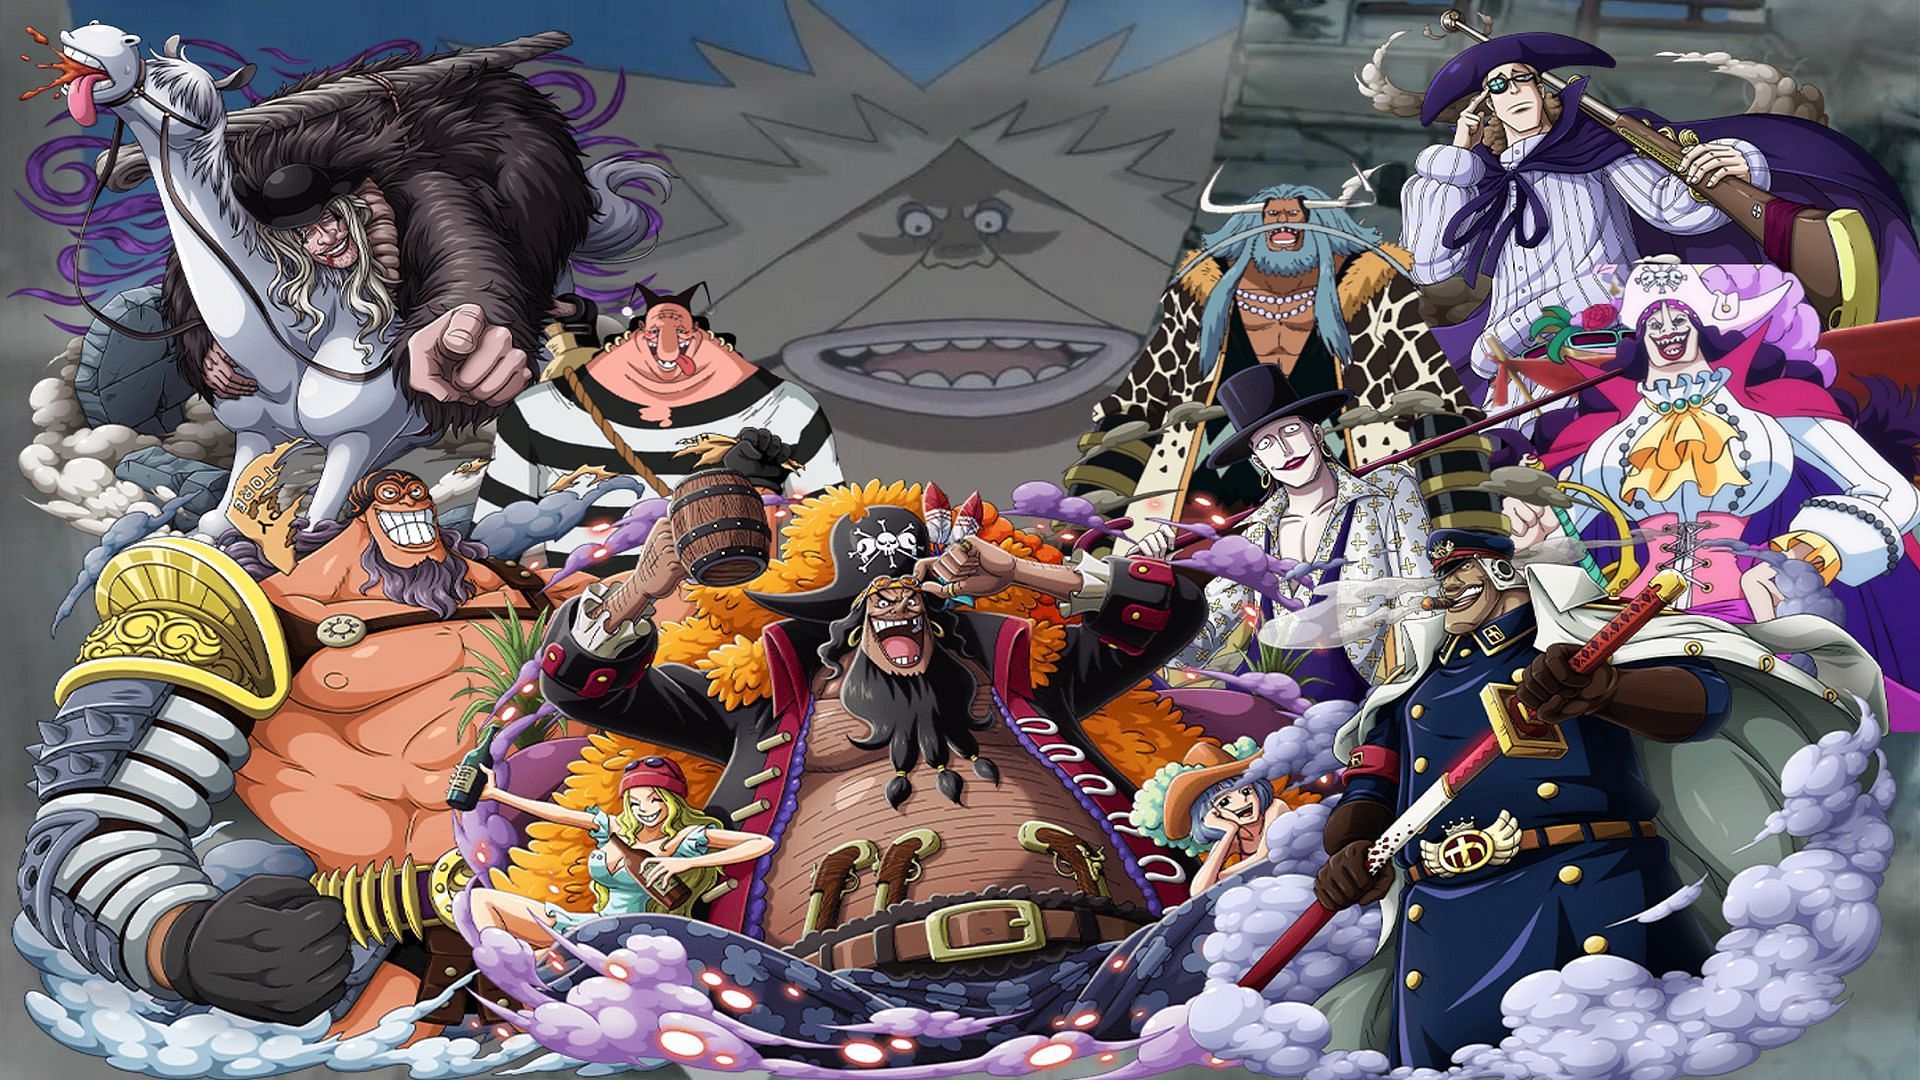 The Blackbeard Pirates (Image via Eiichiiro Oda/Shueisha, One Piece)